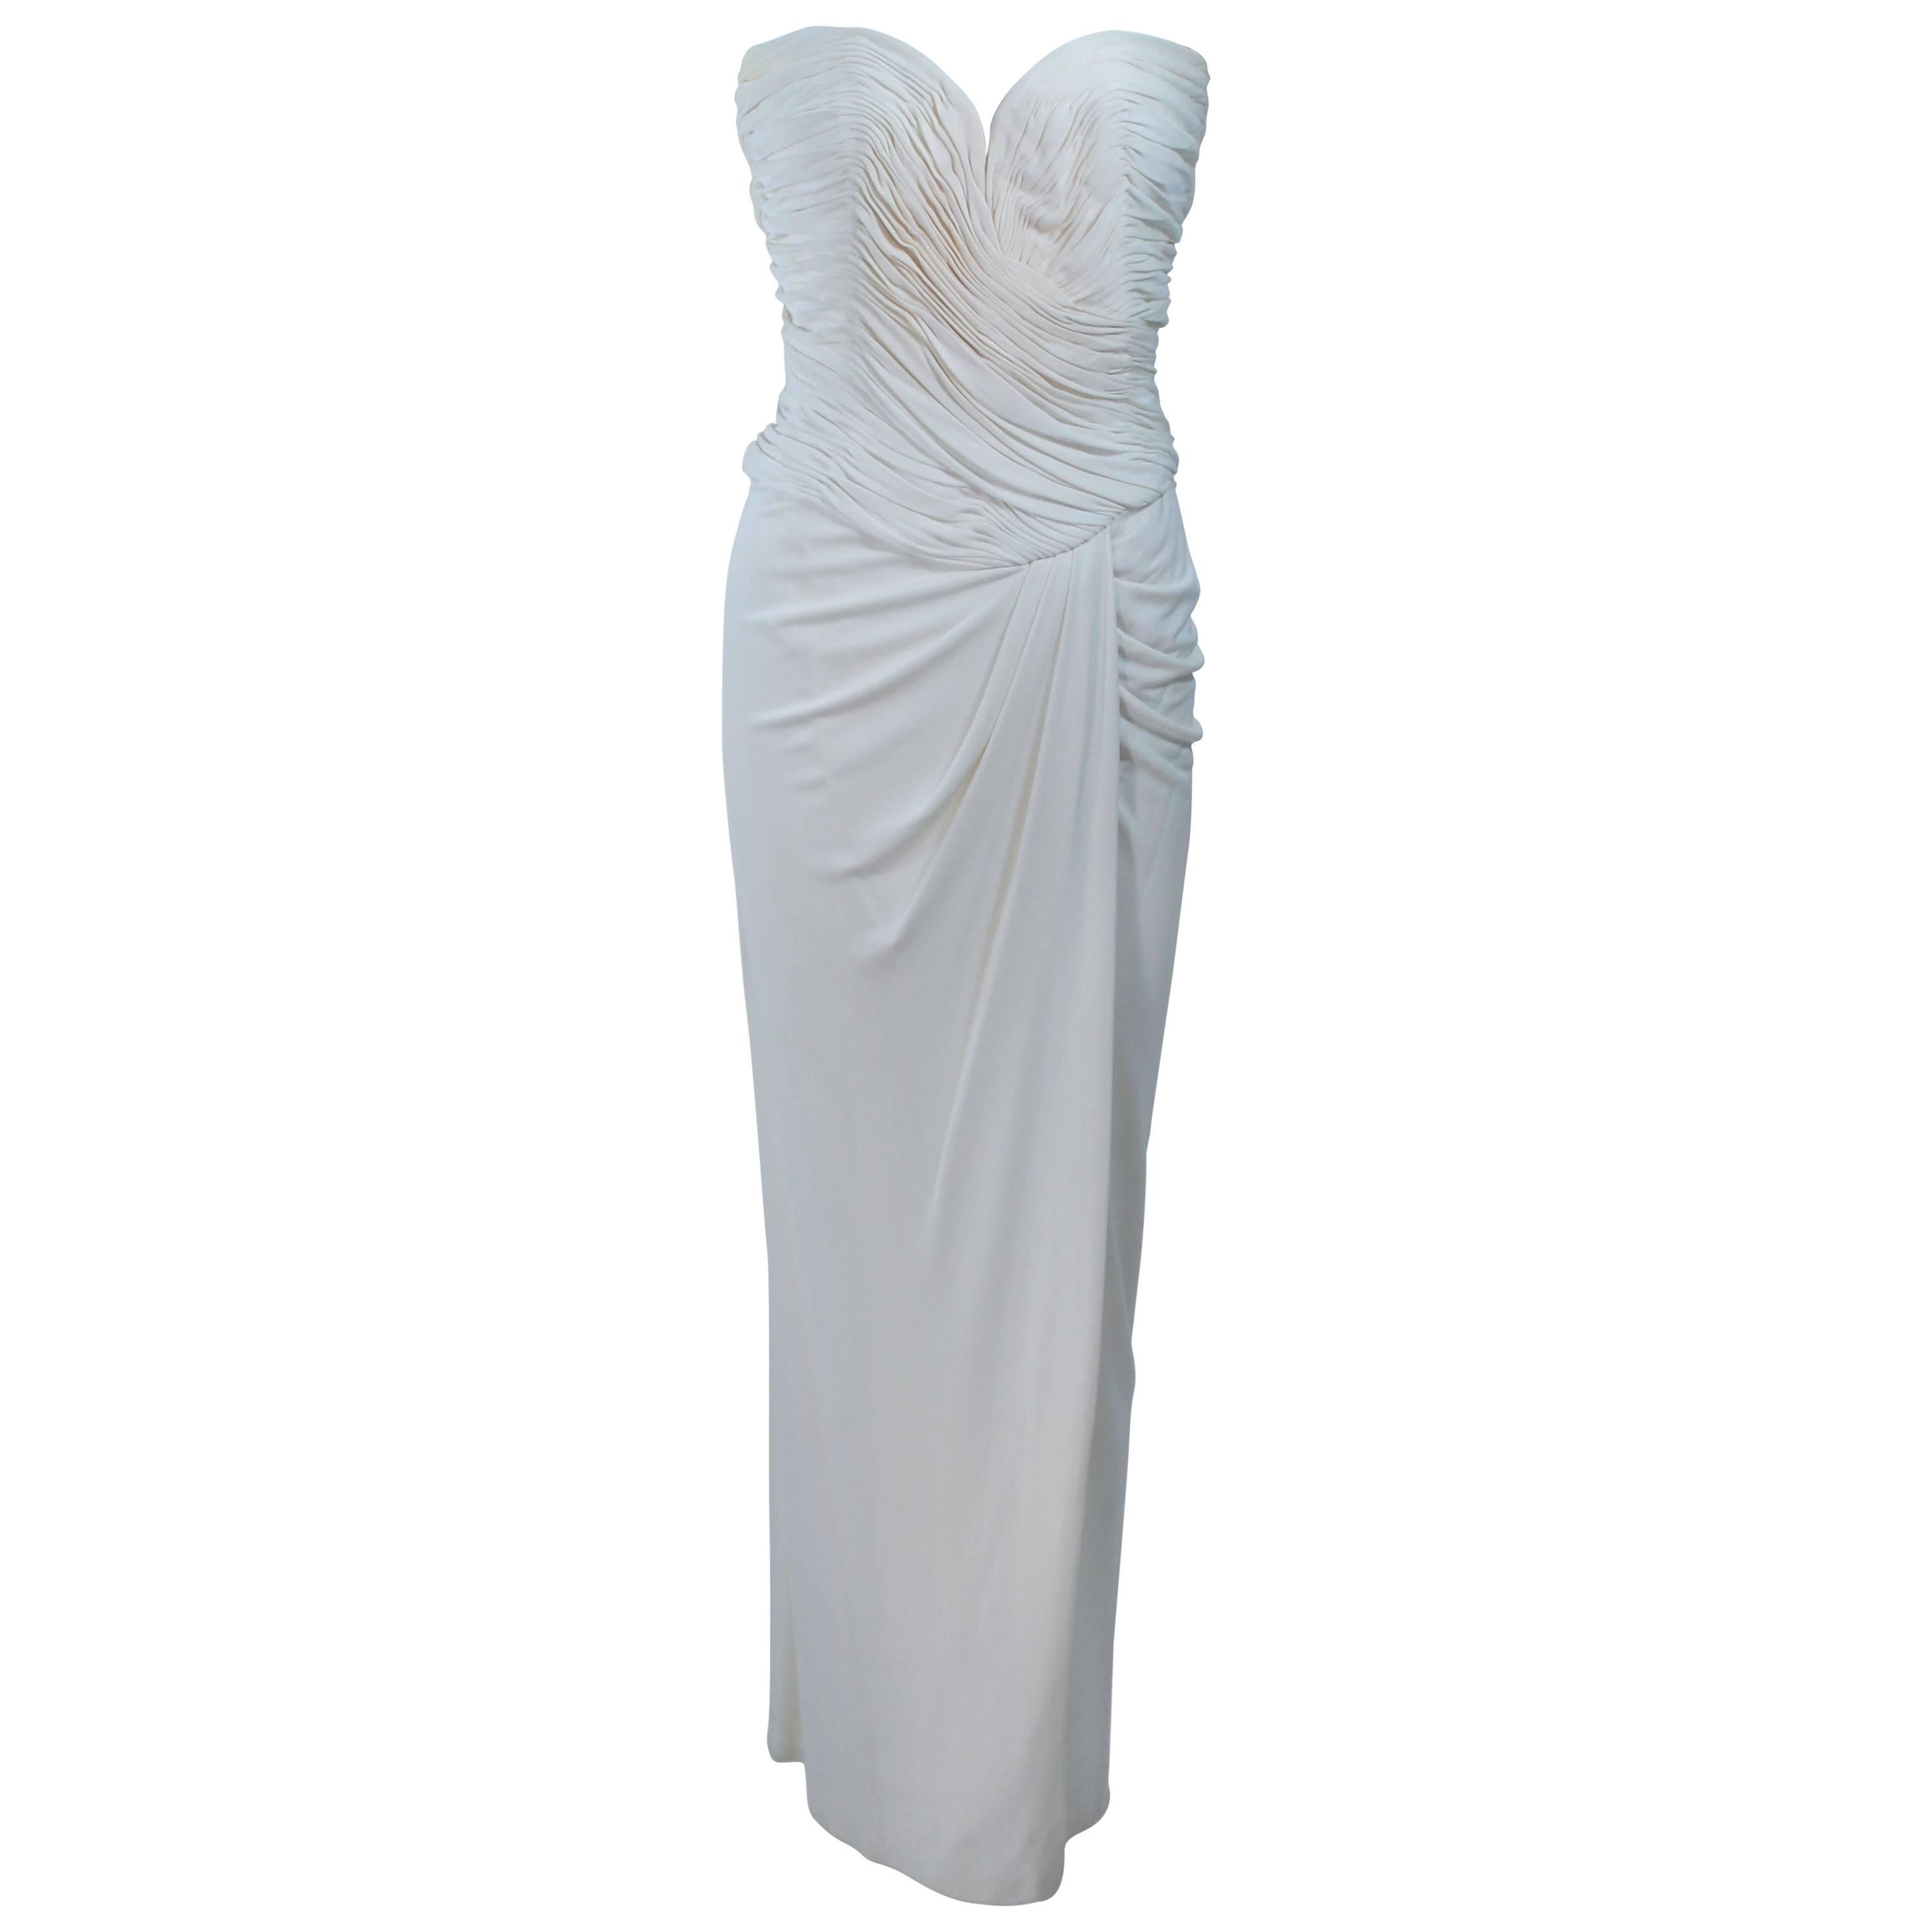 VICKY TIEL Ivory Draped Jersey Gown Size 42 6